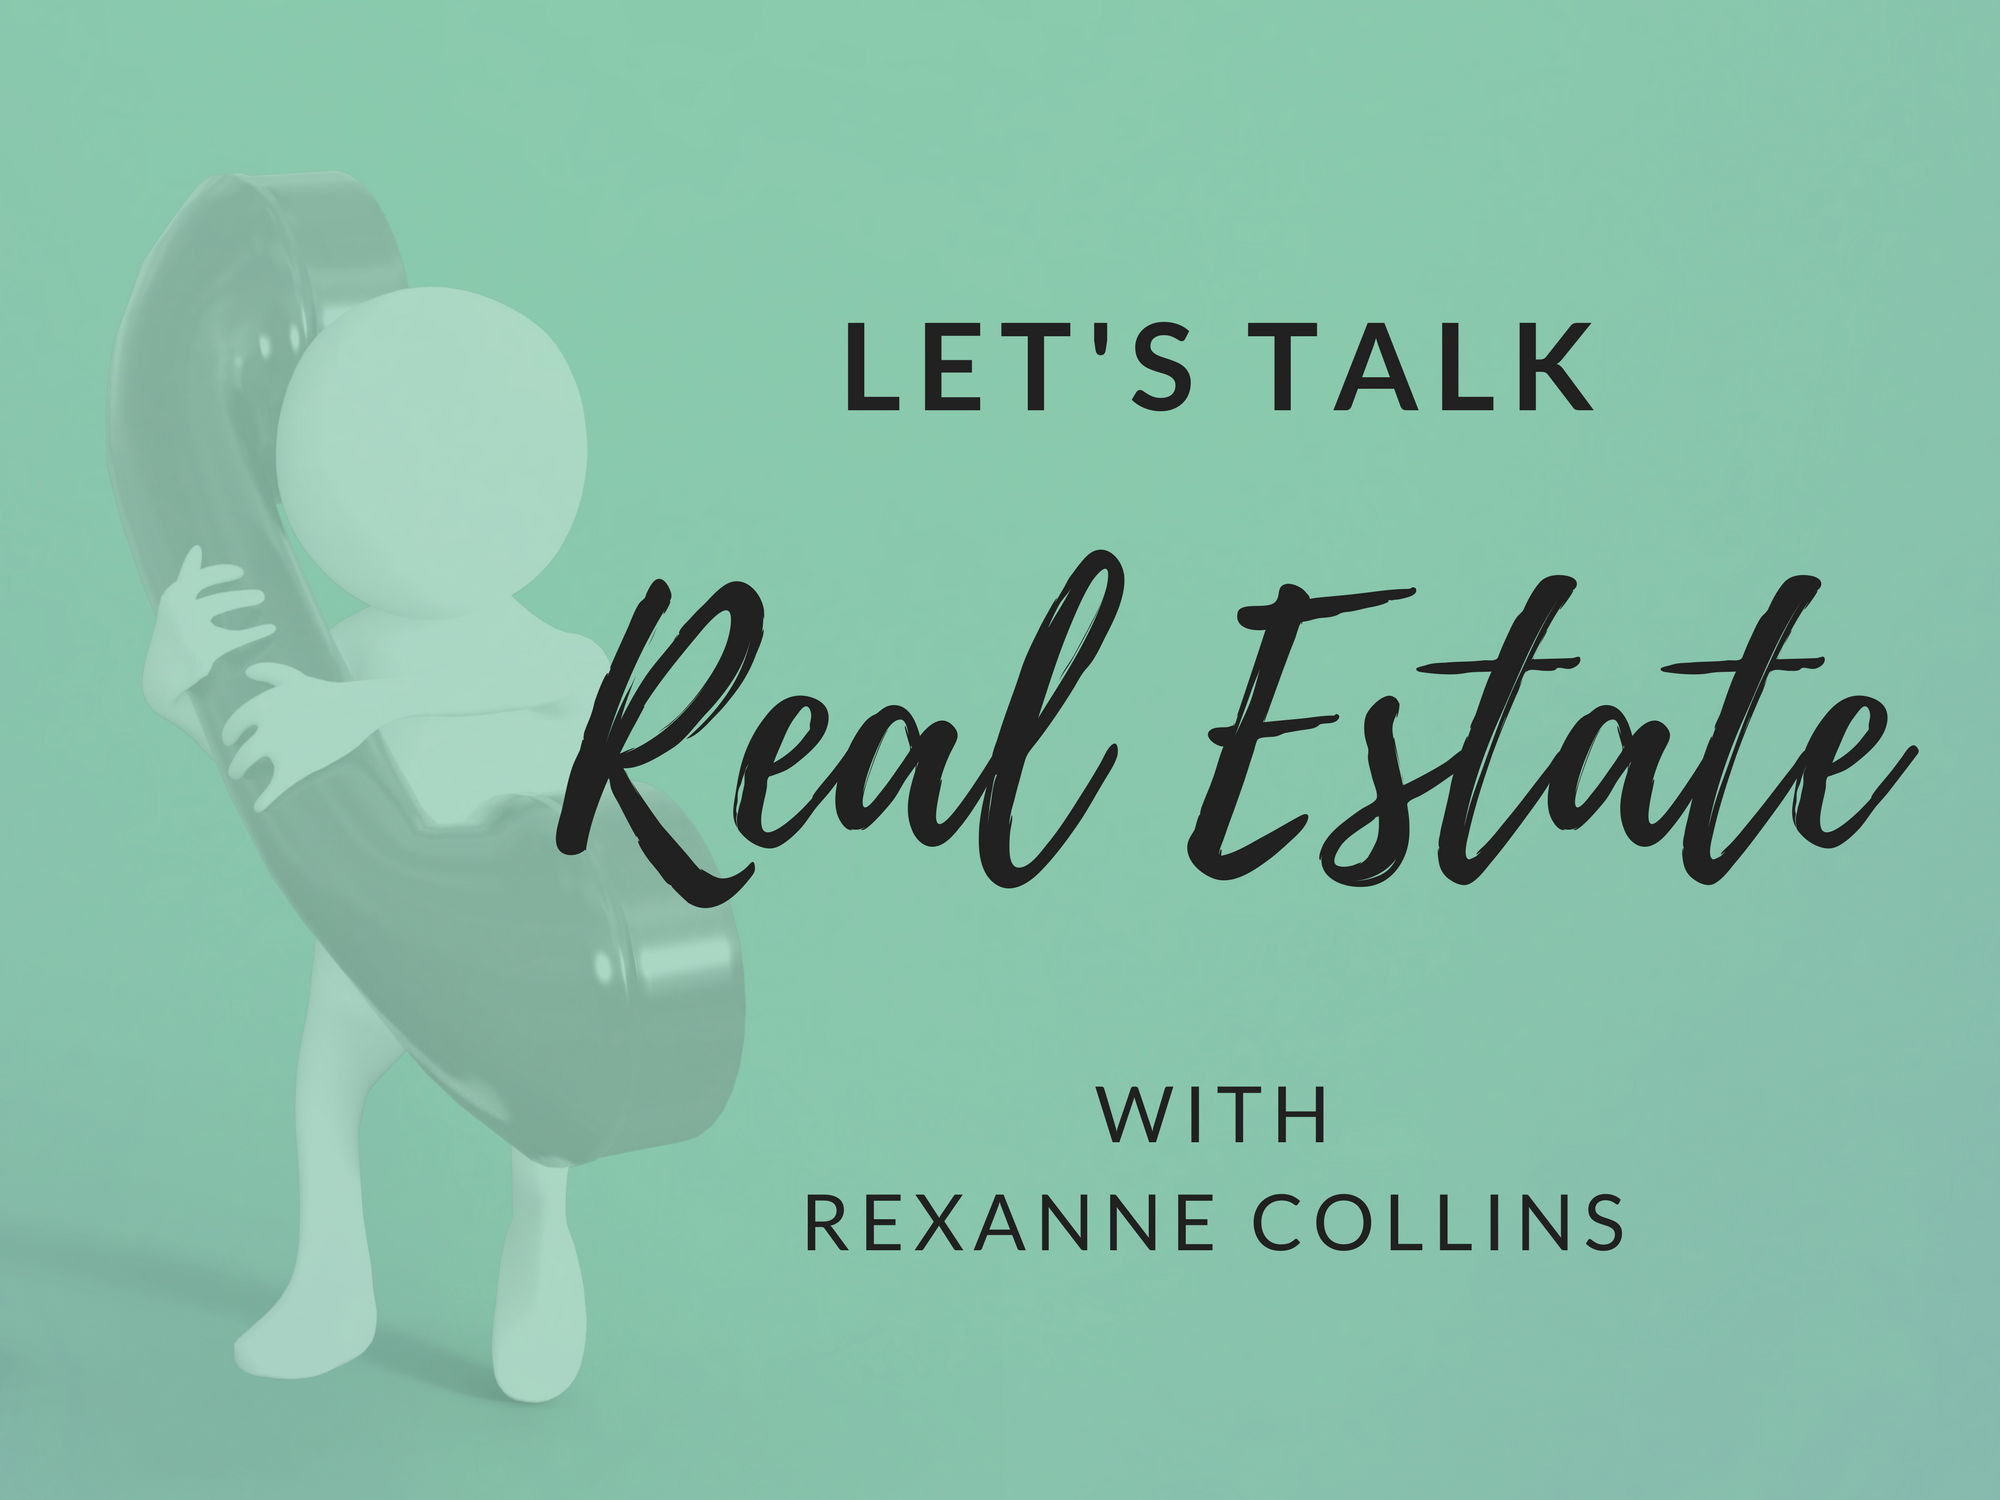 Let's Talk Oxford MS Real Estate